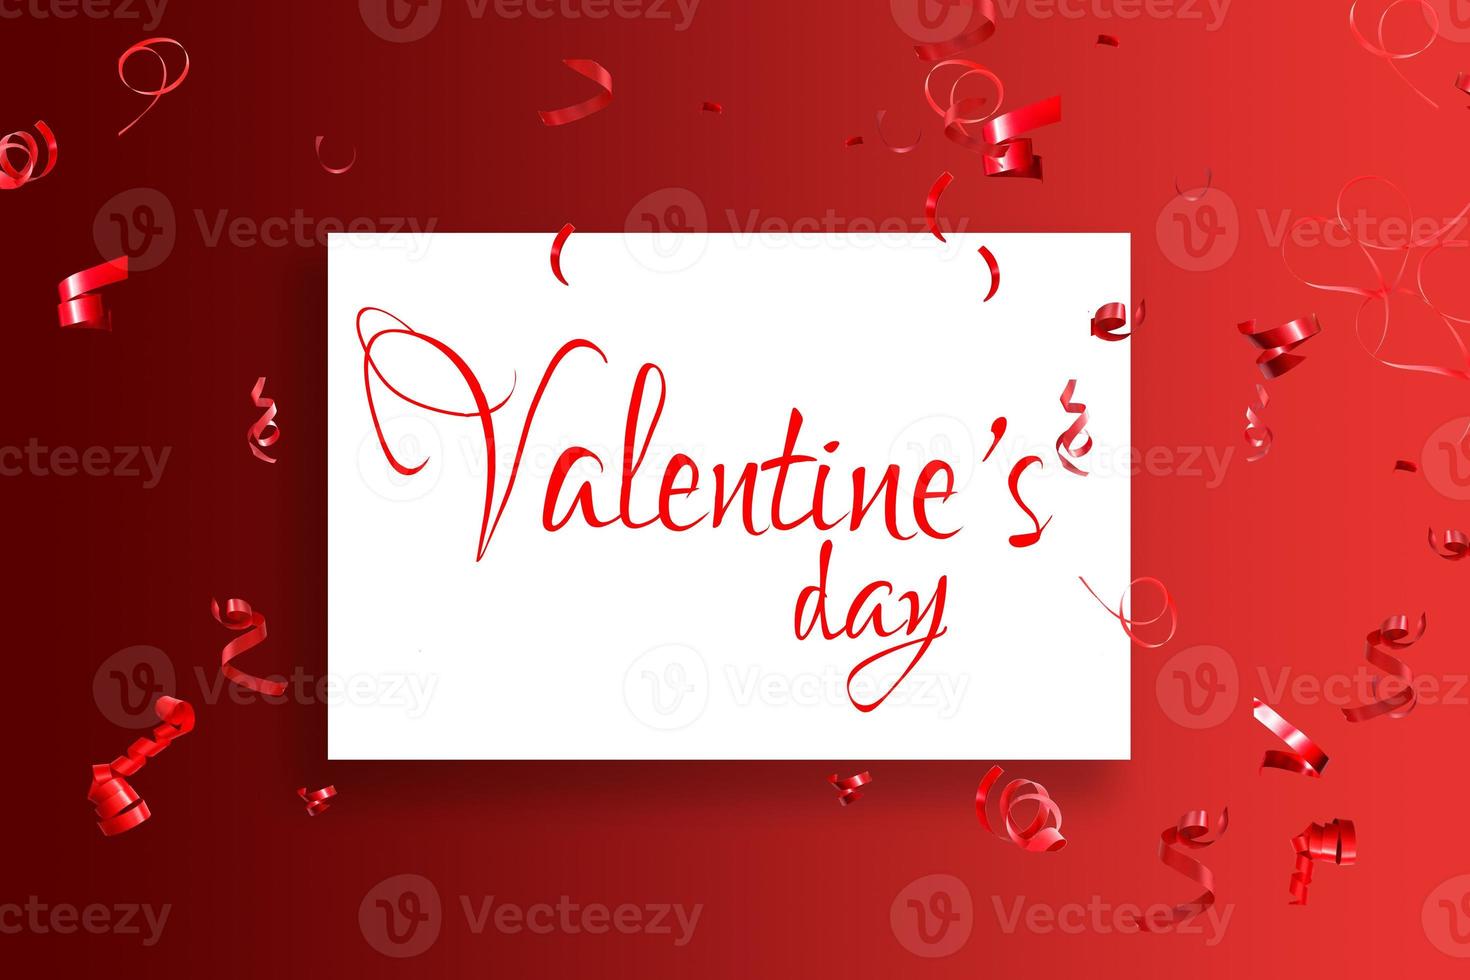 Valentine's day card, red background photo